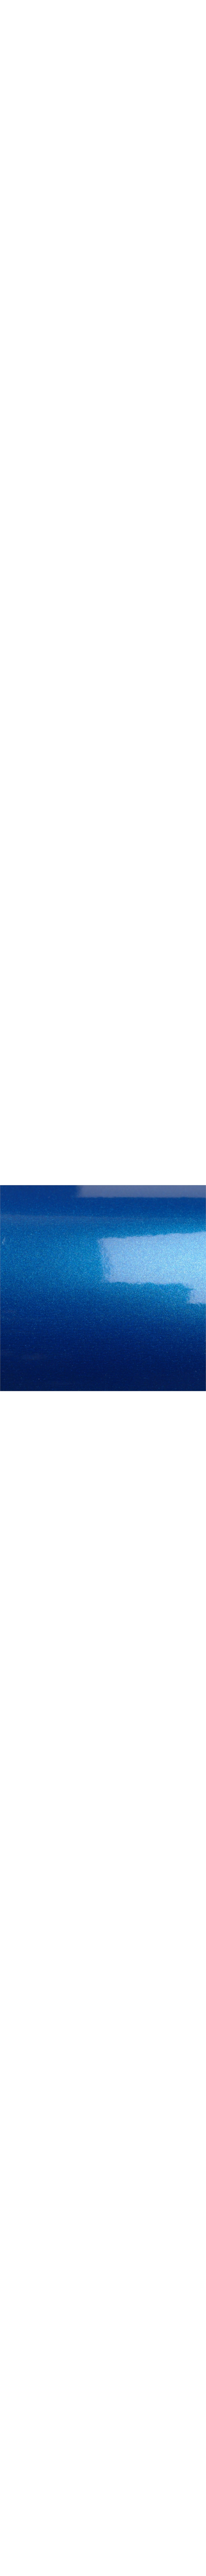 2080-G227 BLUE METALLIC en 1.524m